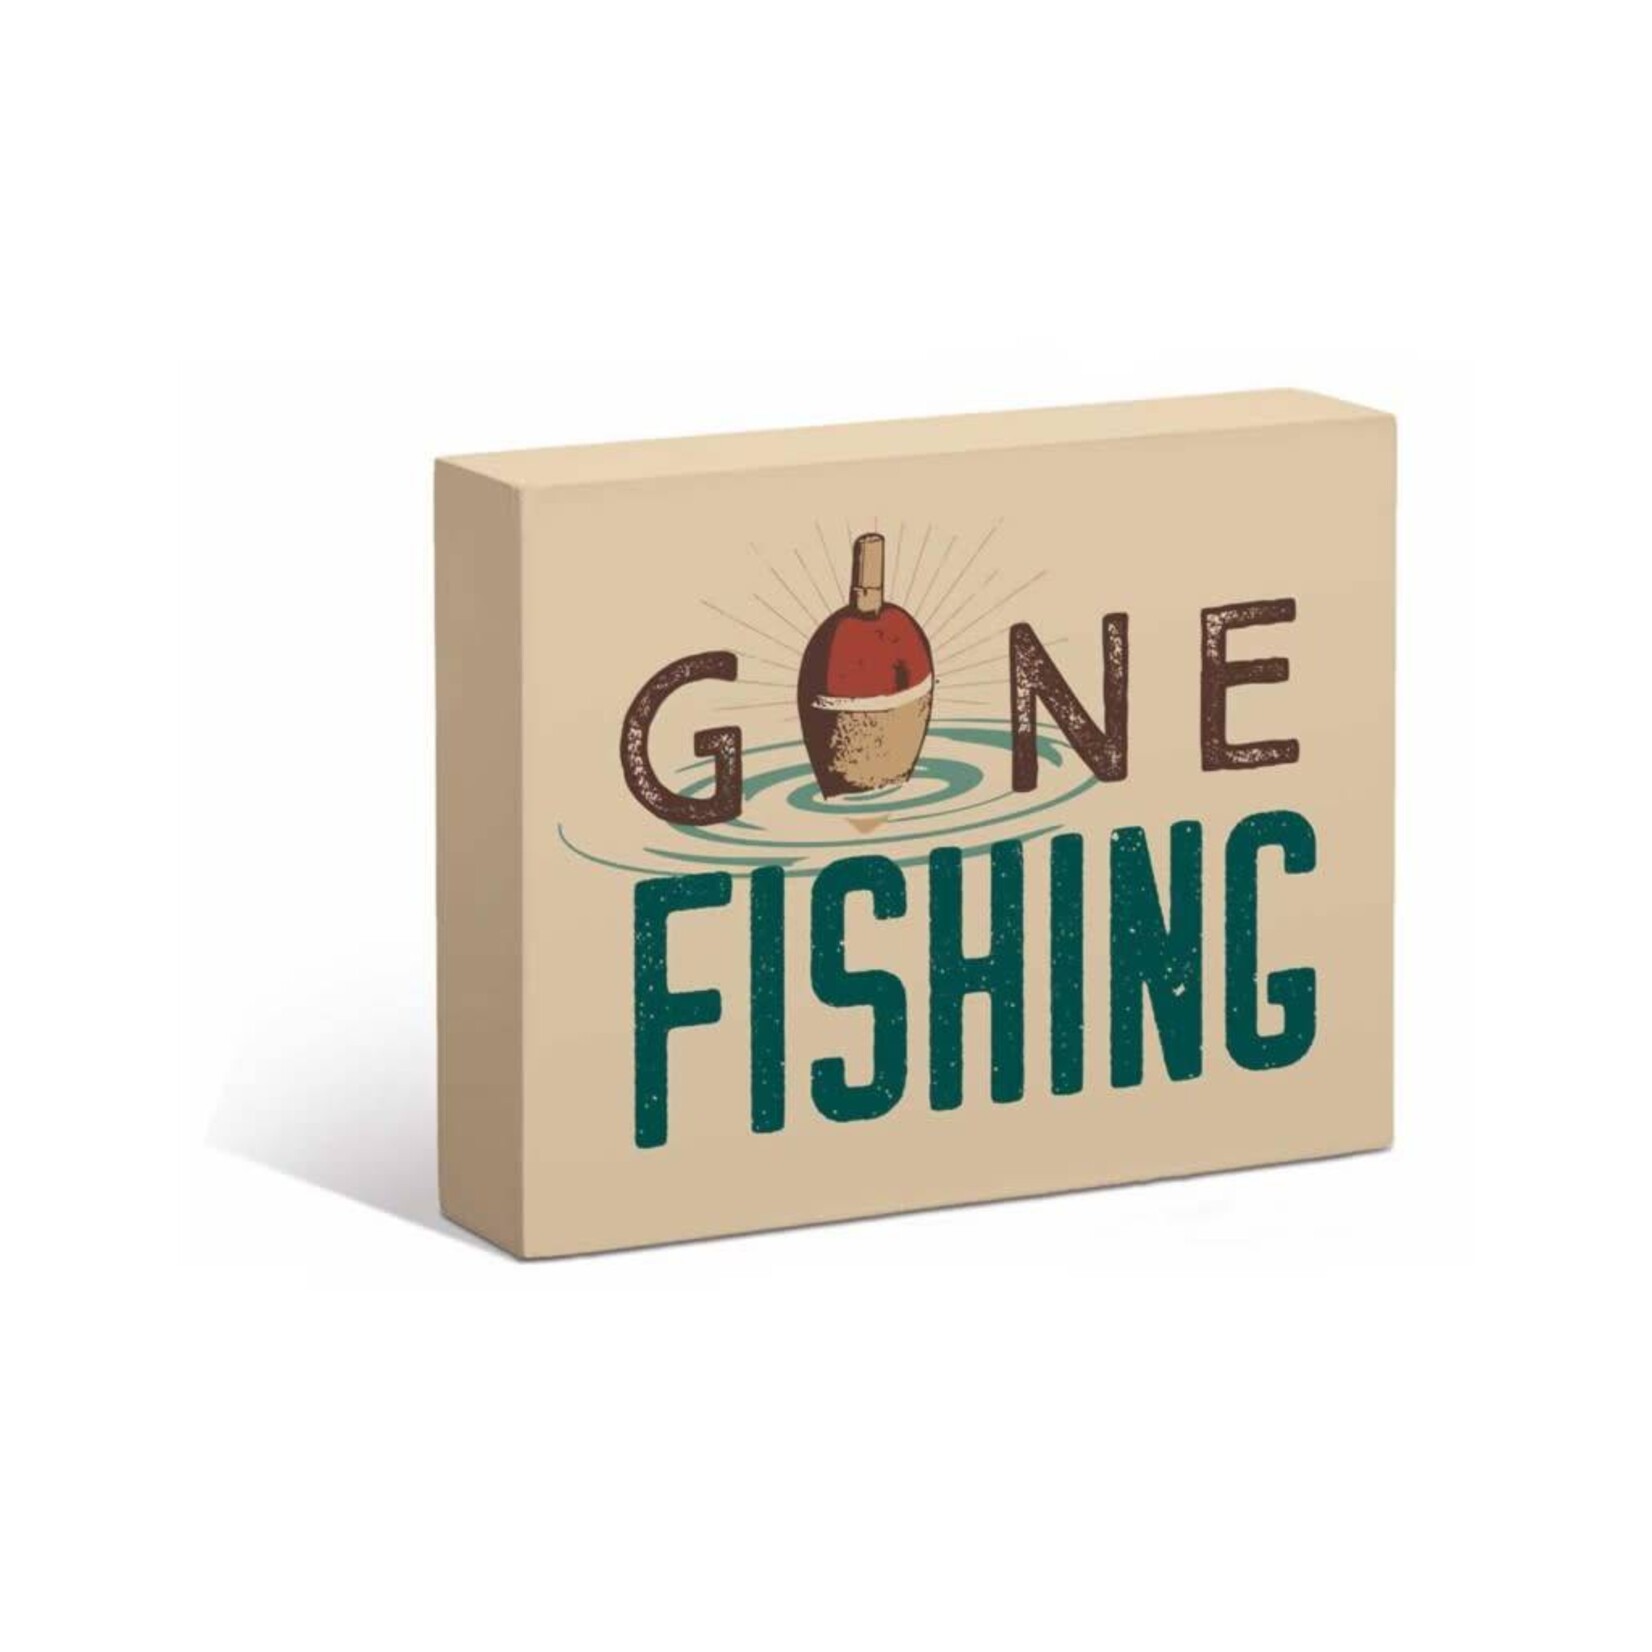 Gone Fishing 7" x 9" Box Art Sign